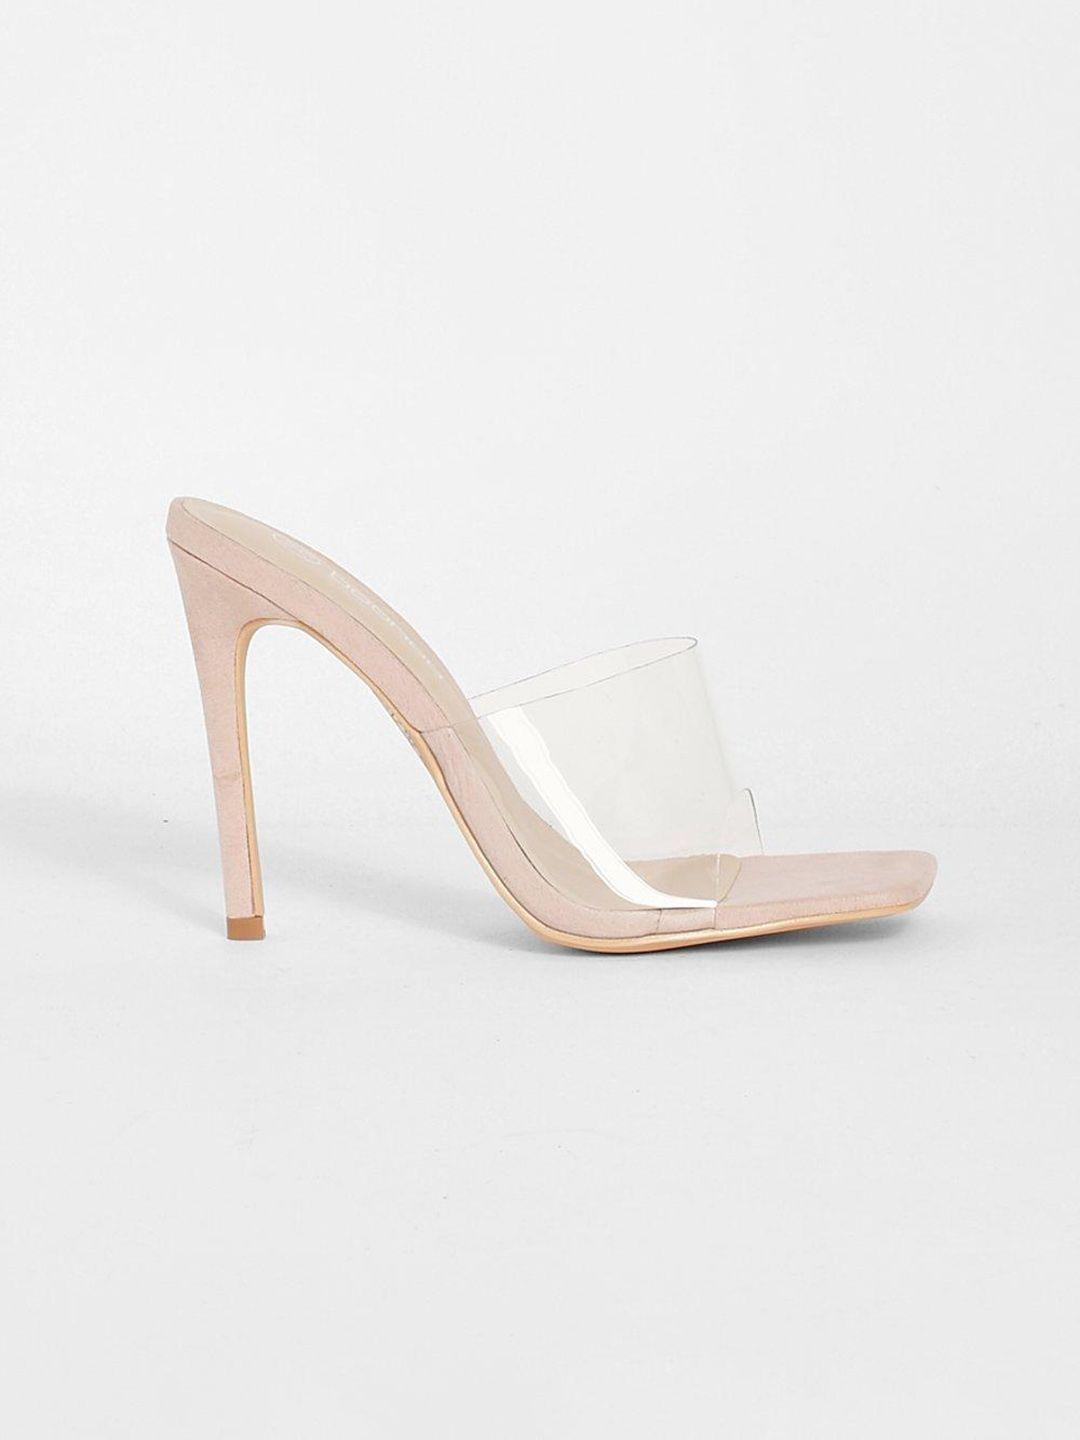 boohoo transparent stiletto heels